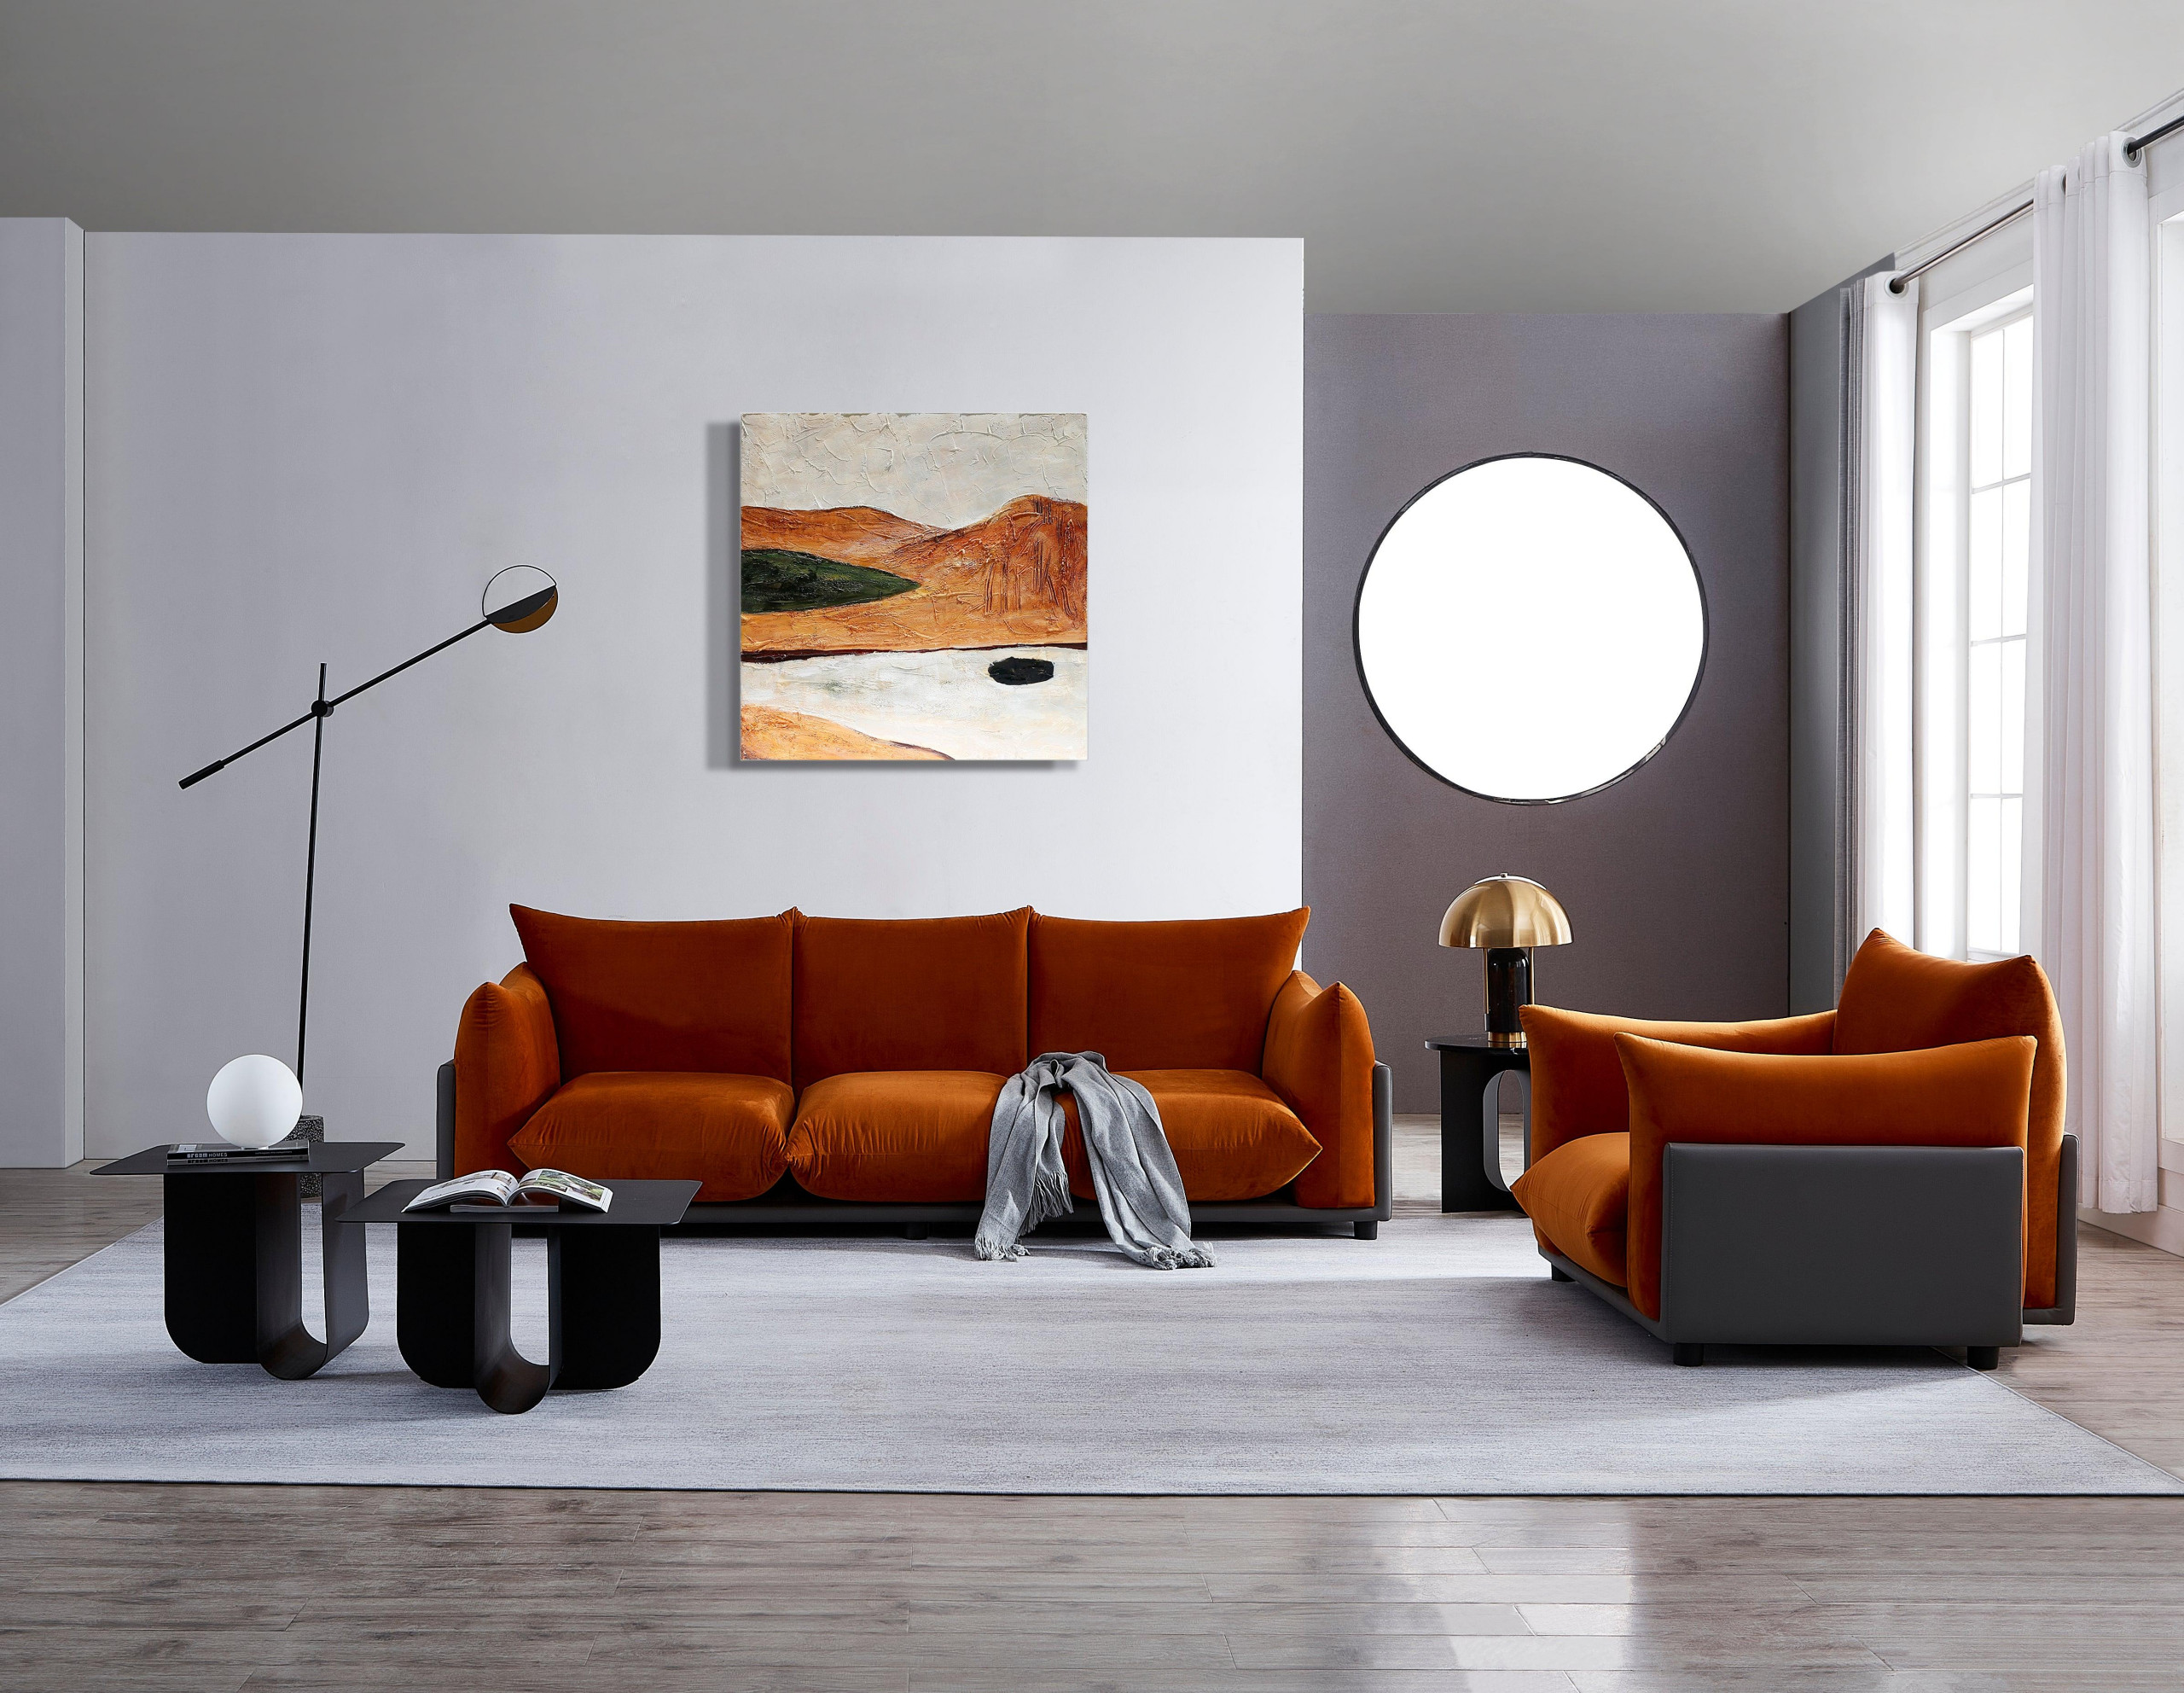 Burnt Orange Sofa - Photos & Ideas | Houzz